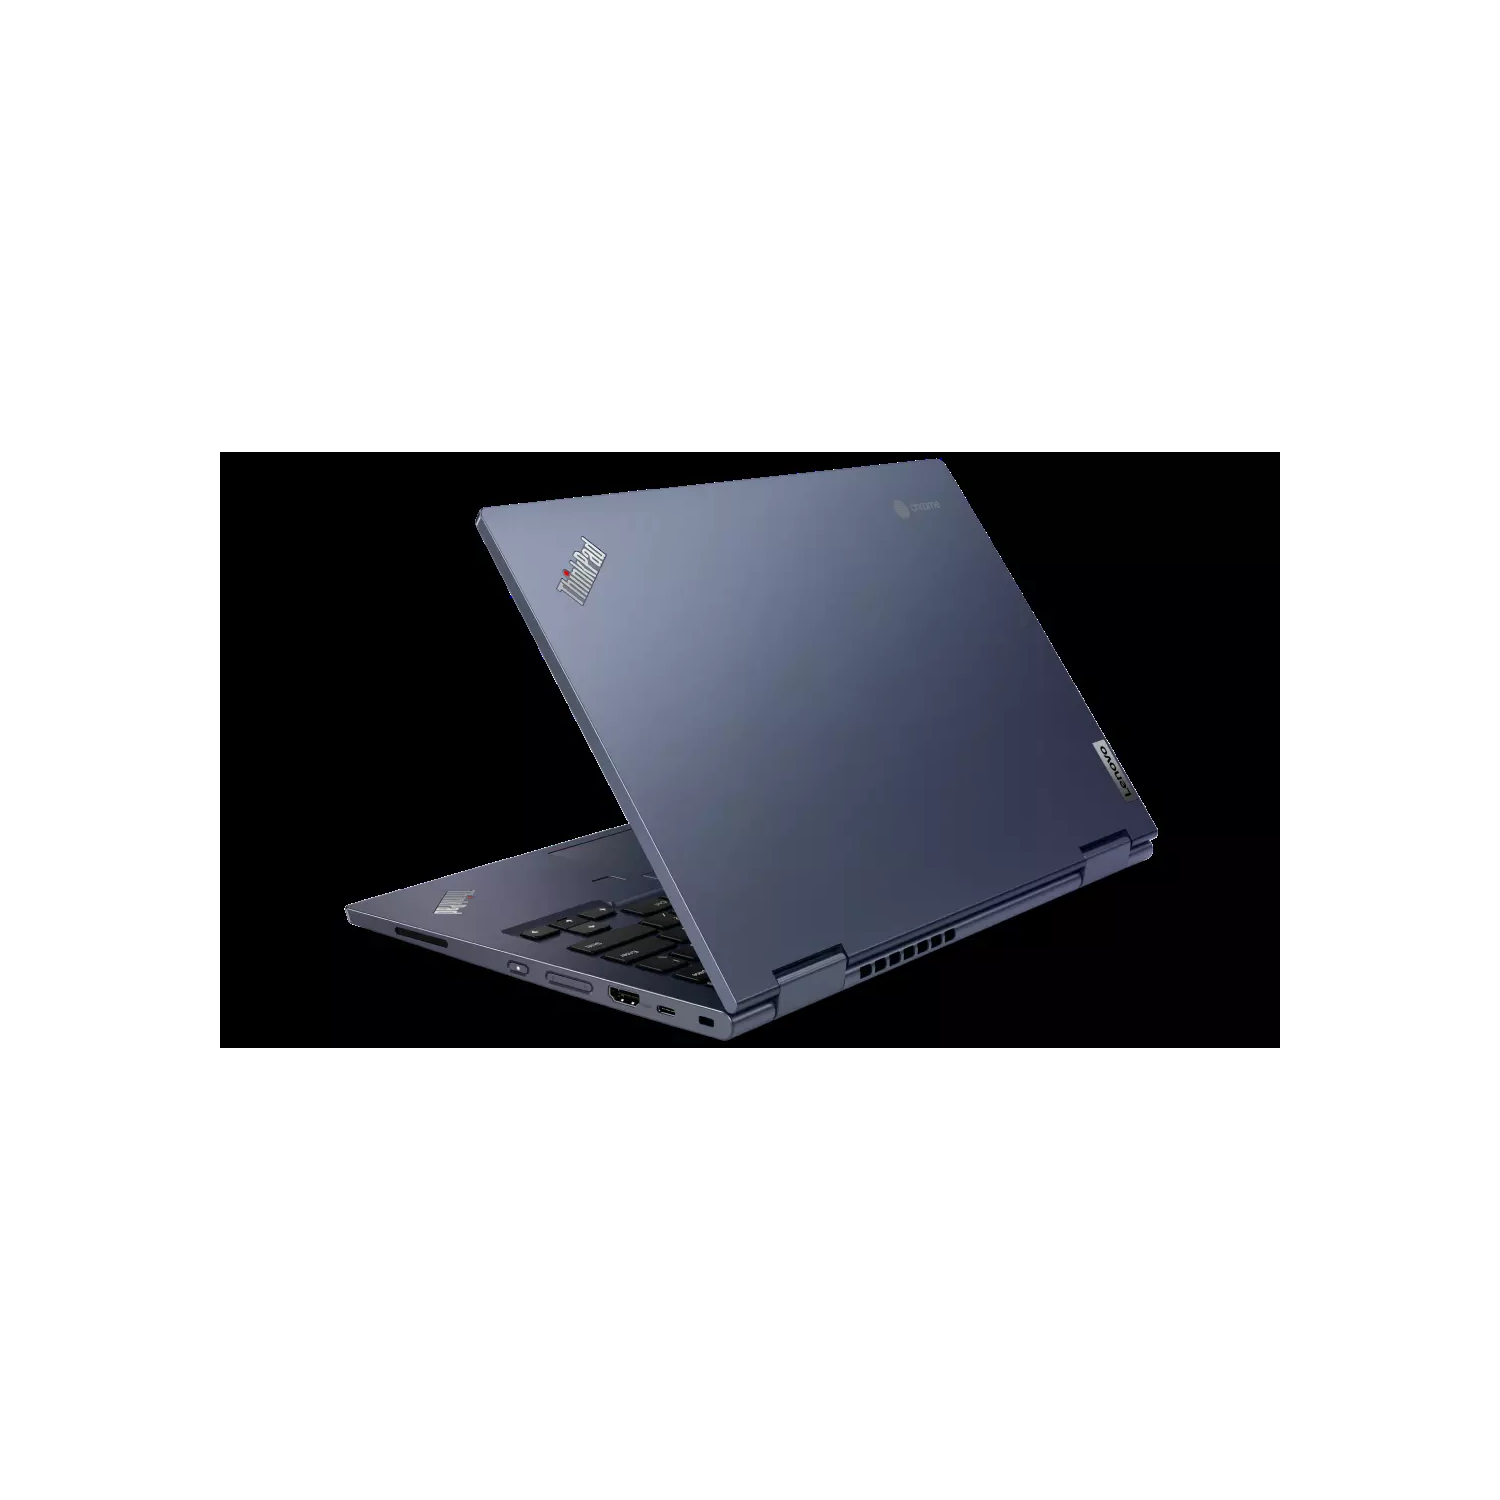 Lenovo ThinkPad C13 Yoga Chromebook Laptop - European French Keyboard - 13.3" FHD IPS Touch 300 nits - AMD Ryzen 5 3500C - 8GB RAM - 128GB SSD - Brand New Sealed Box